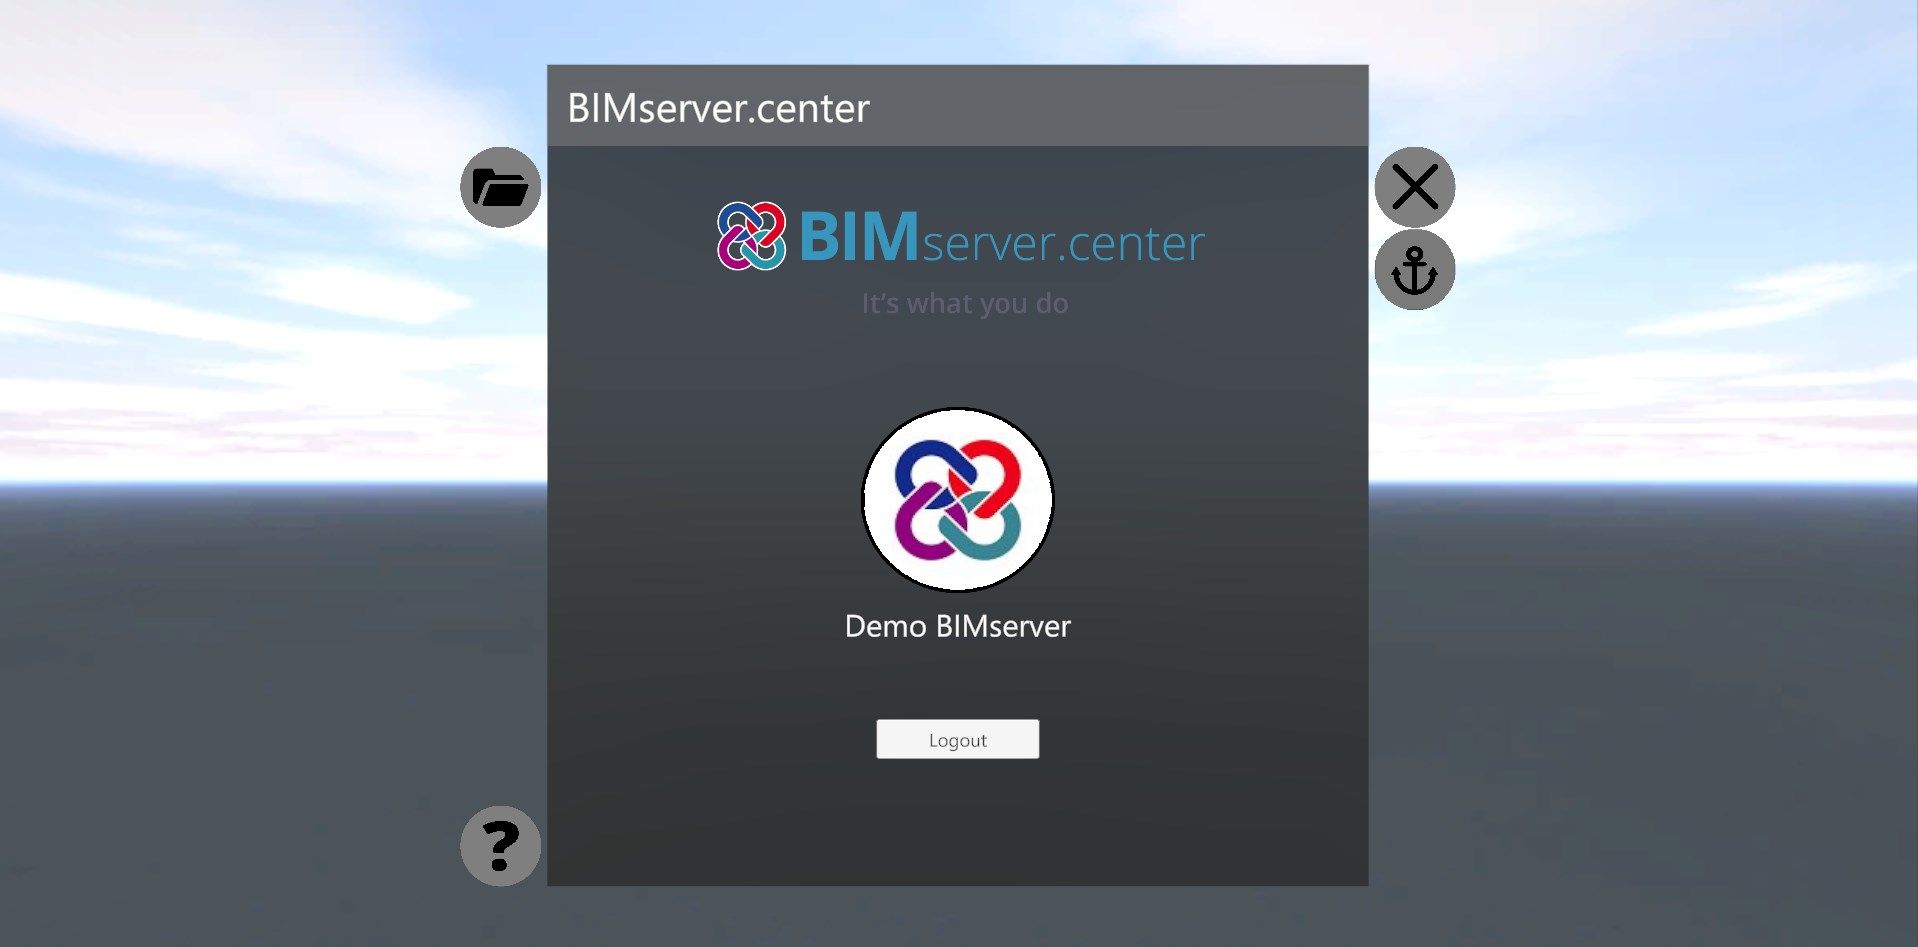 BIMserver.center Virtual Reality